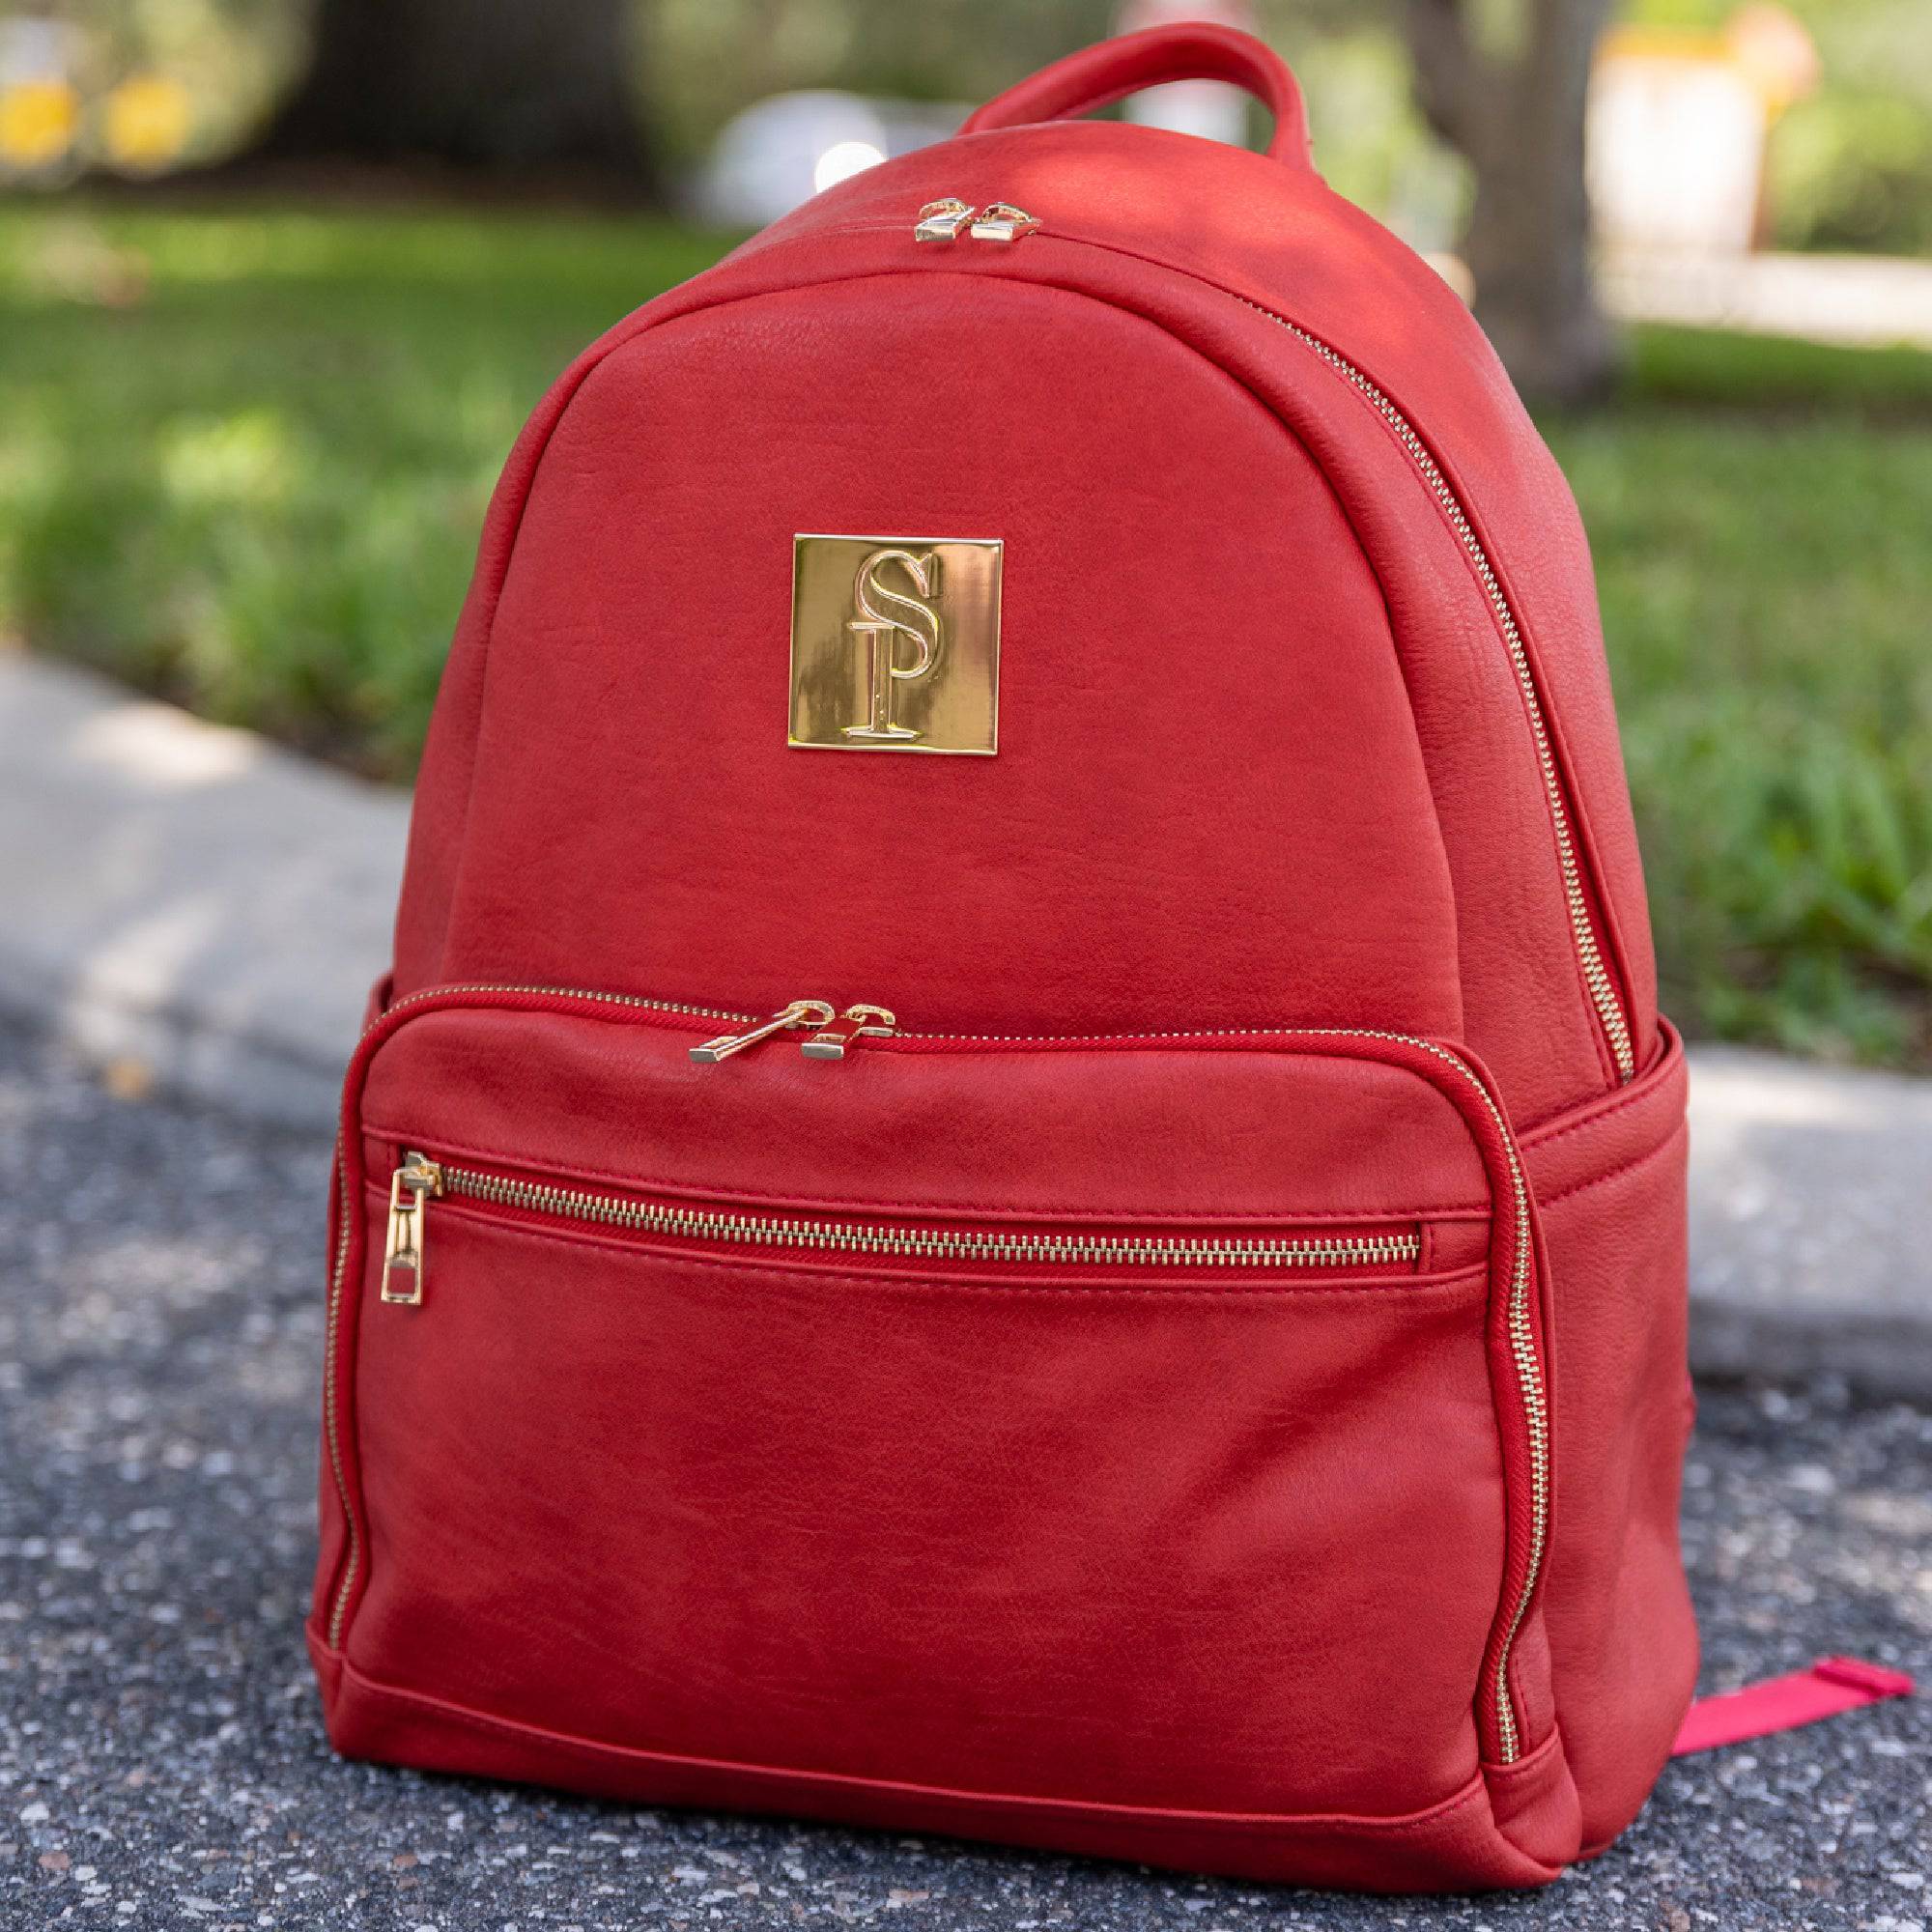 Red Carrier Bag copy (1)